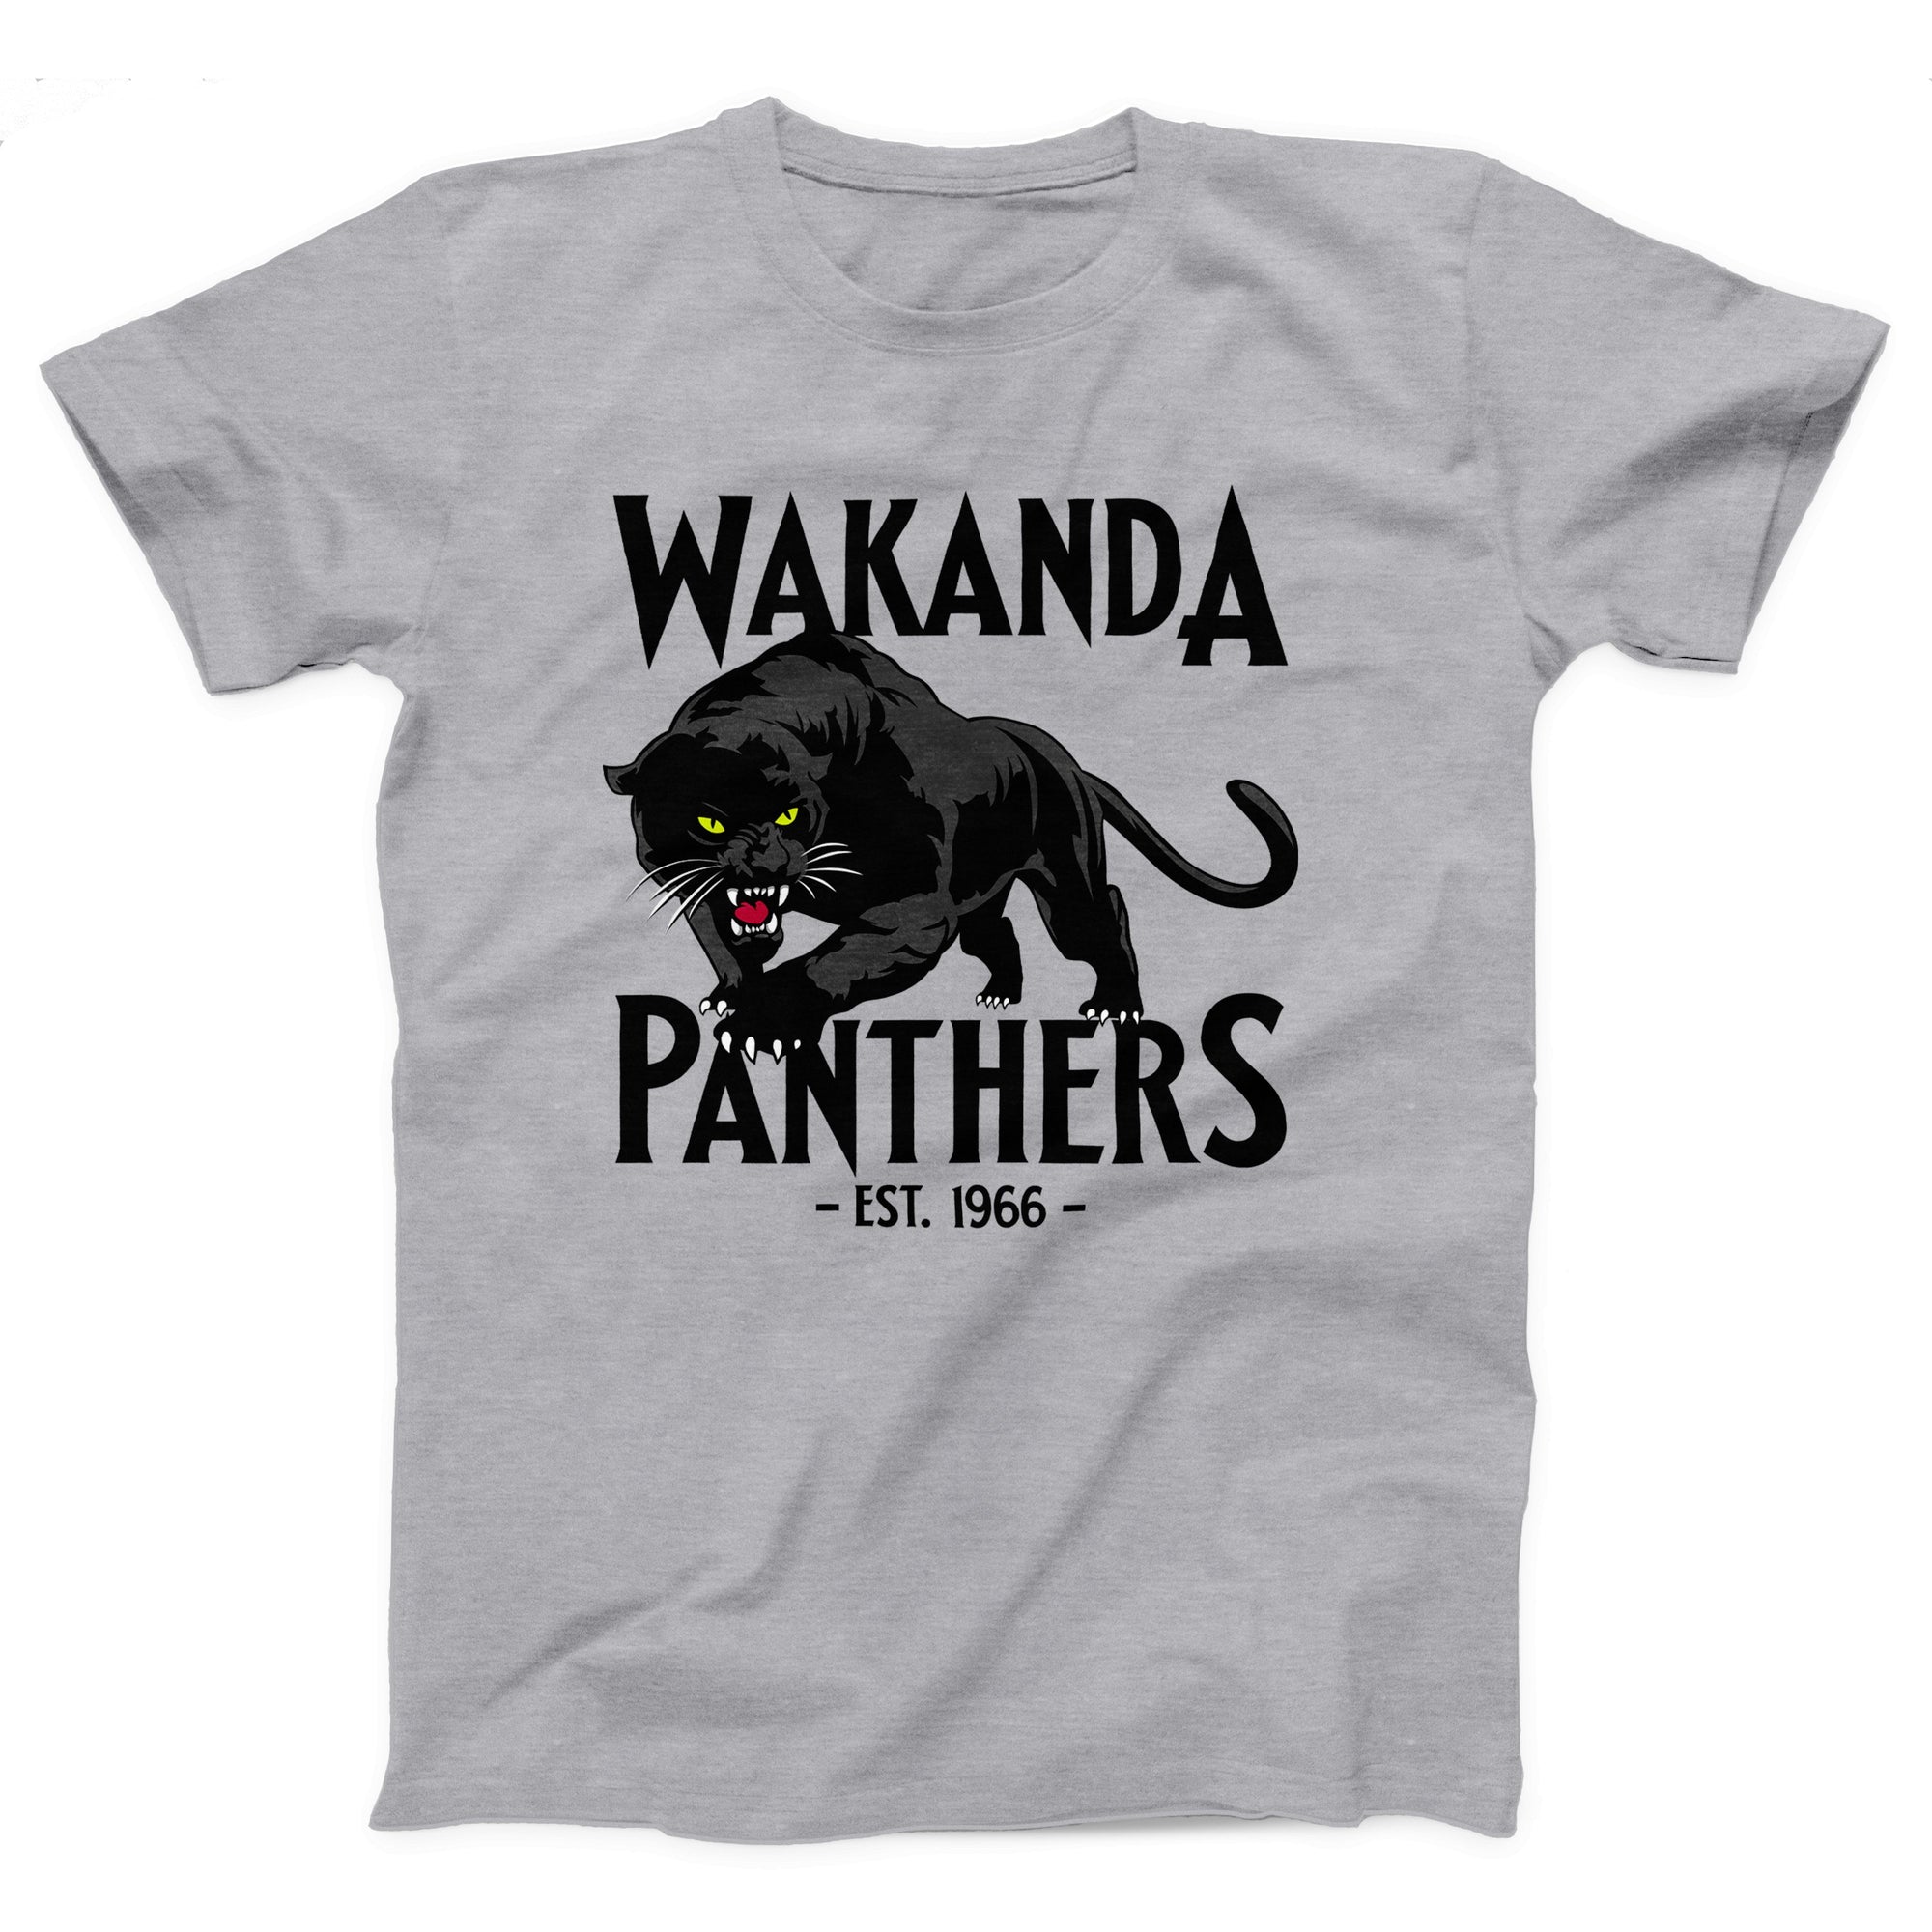 Wakanda Panthers Adult Unisex T-Shirt - Twisted Gorilla